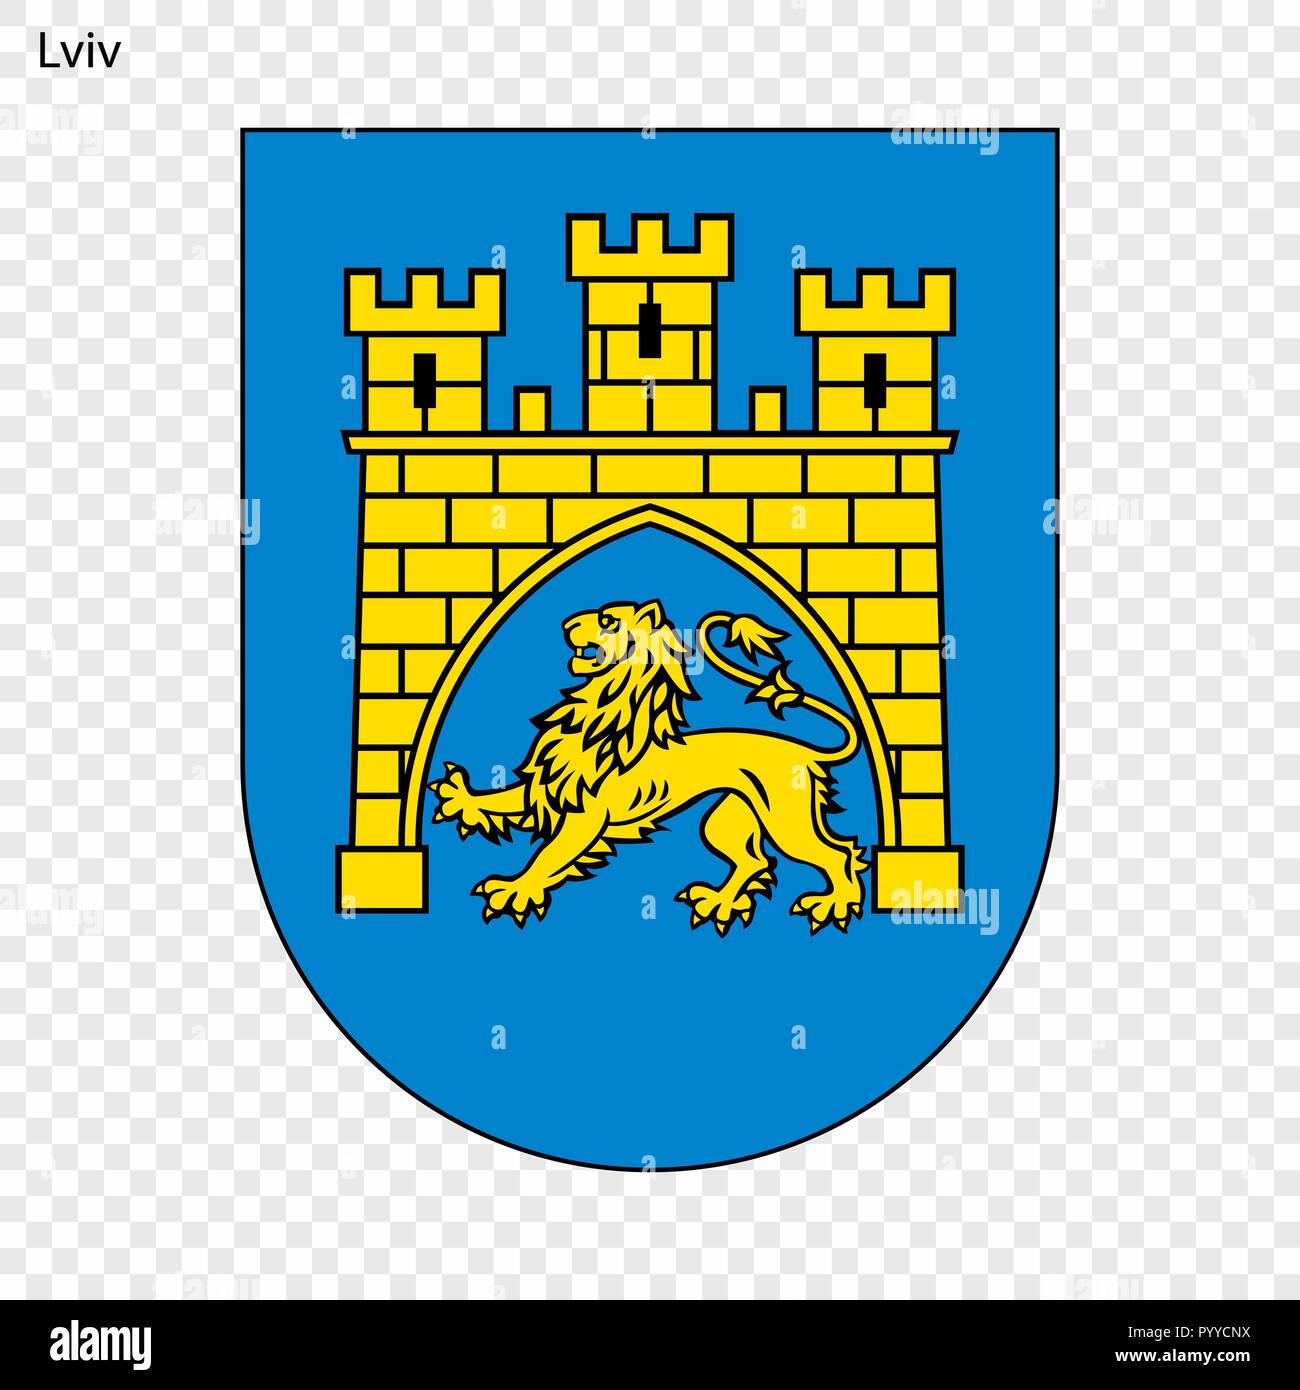 Emblem of Lviv. City of Ukraine. Vector illustration Stock Vector